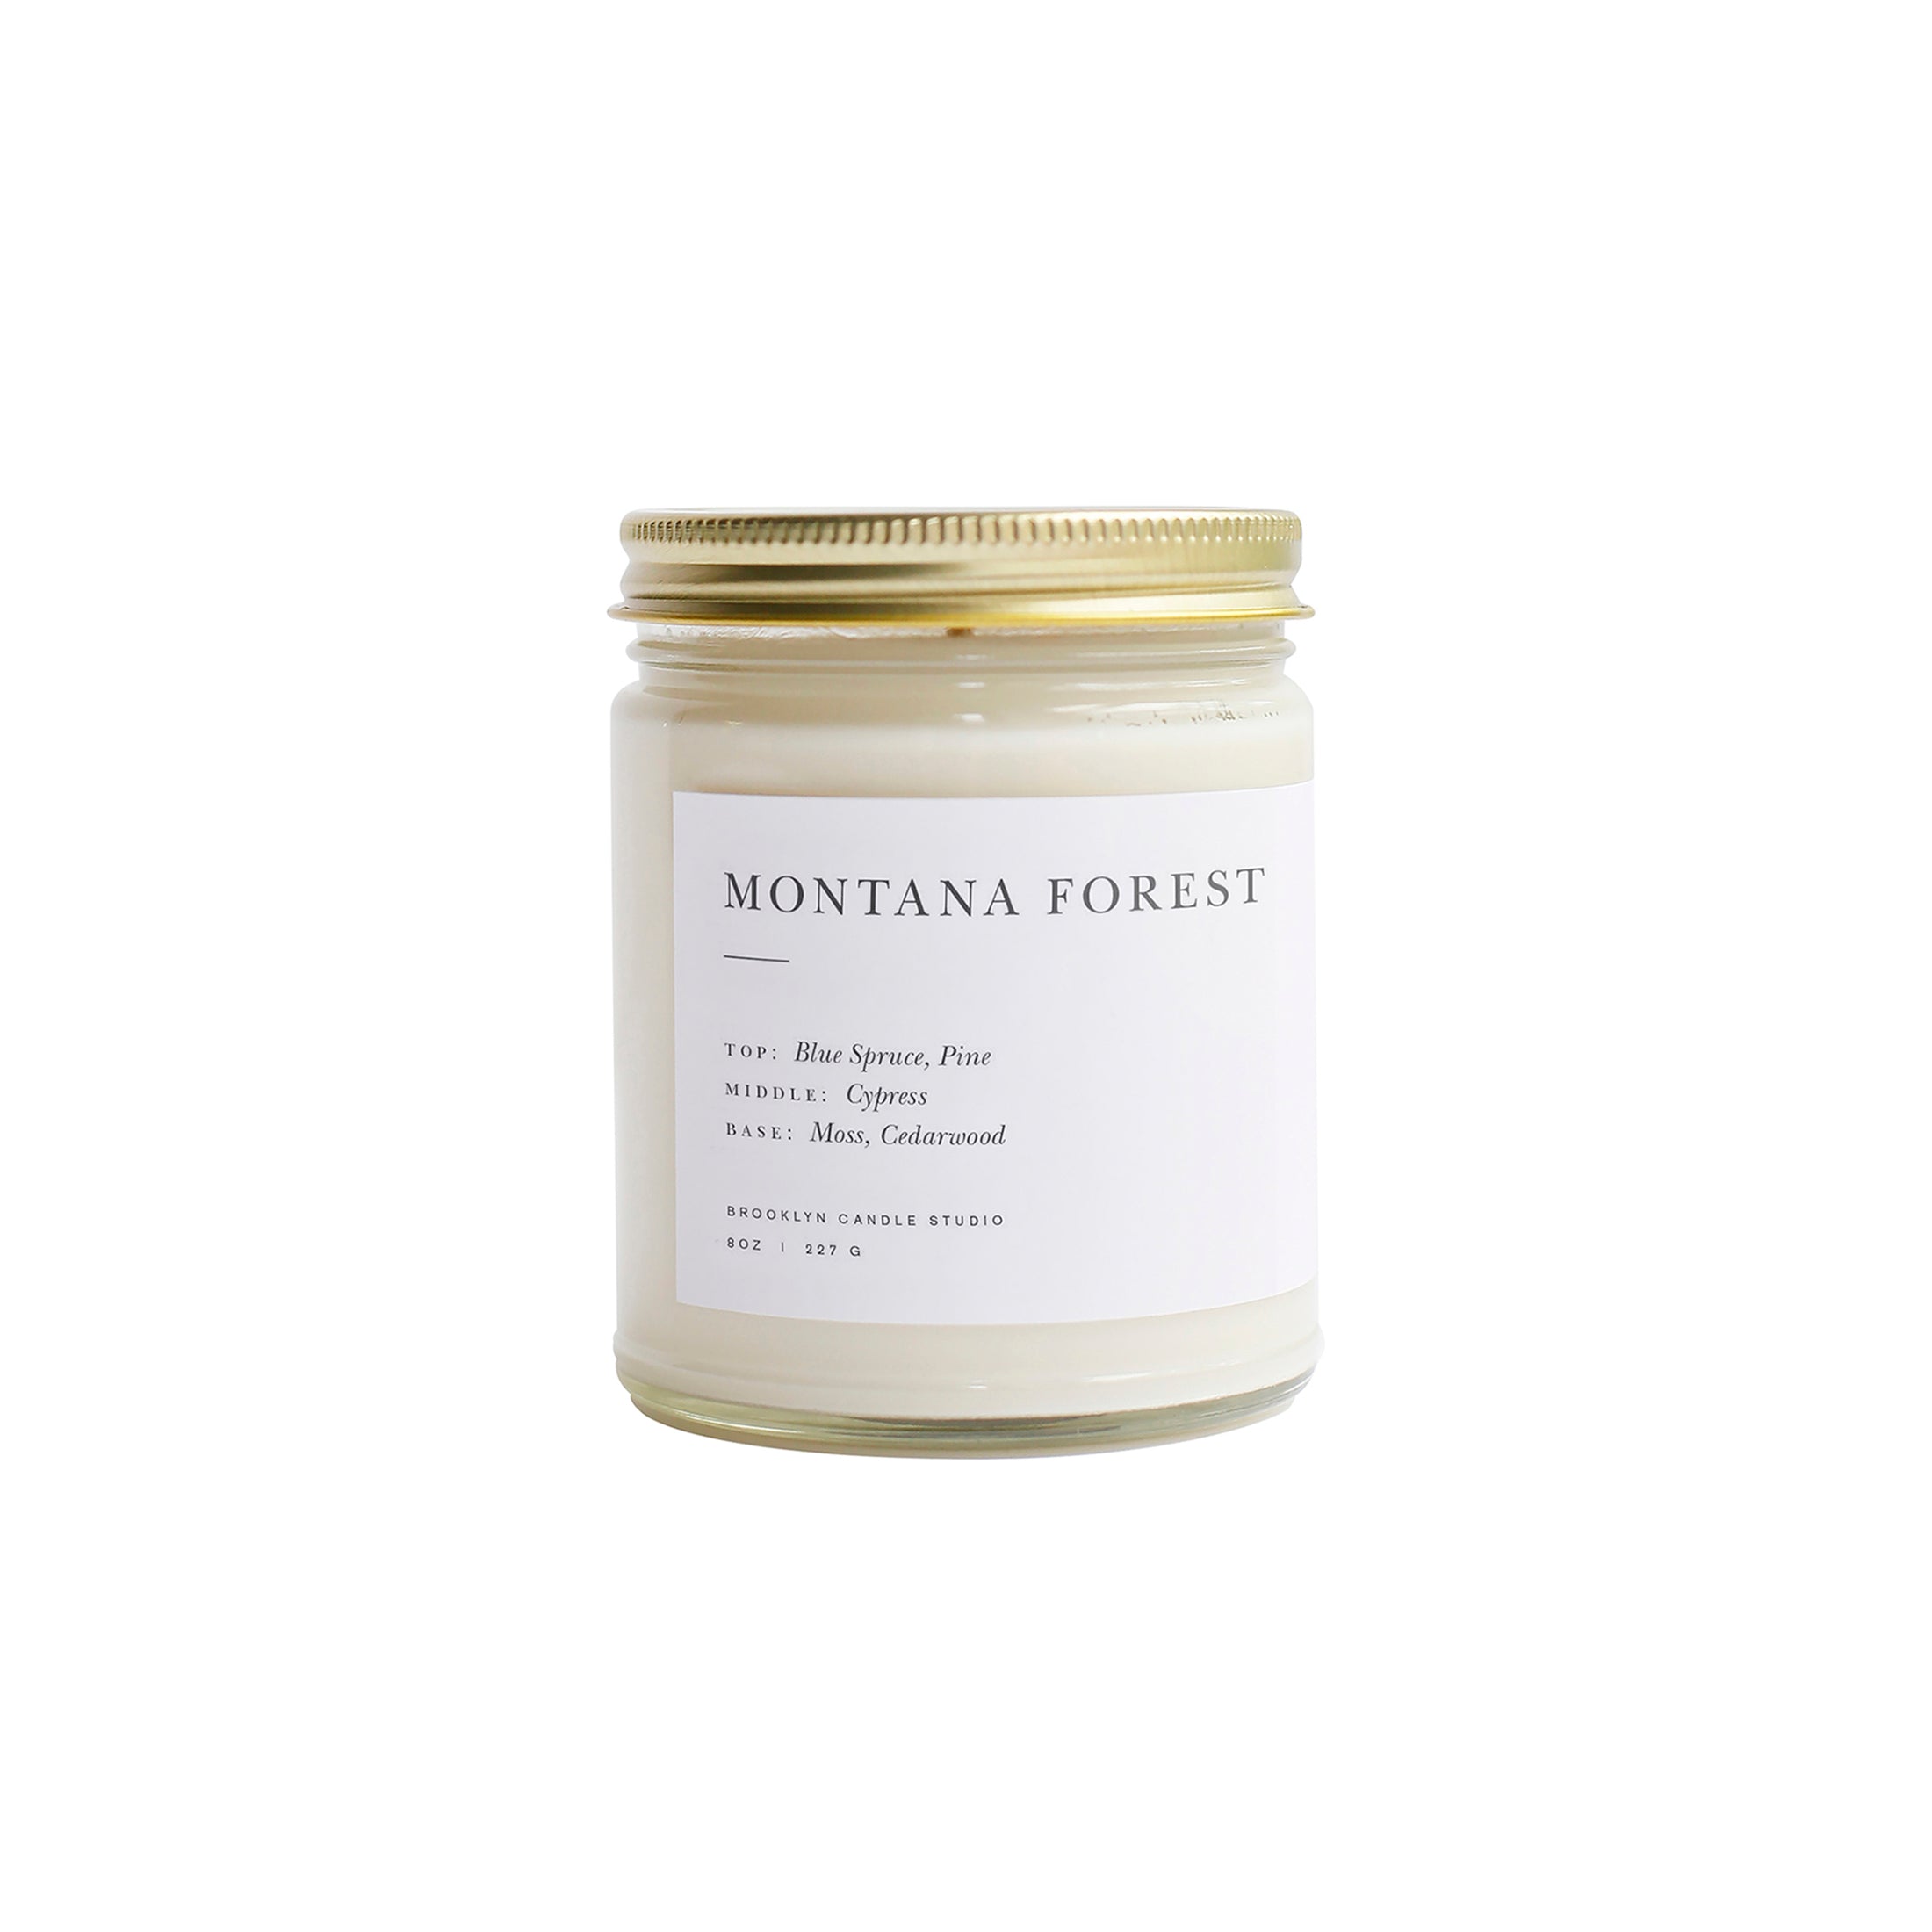 Herring & Bones - Concept Store Joyeux - Brooklyn Candle Studio - Bougies Parfumées - Bougie Minimalist "Montana Forest"